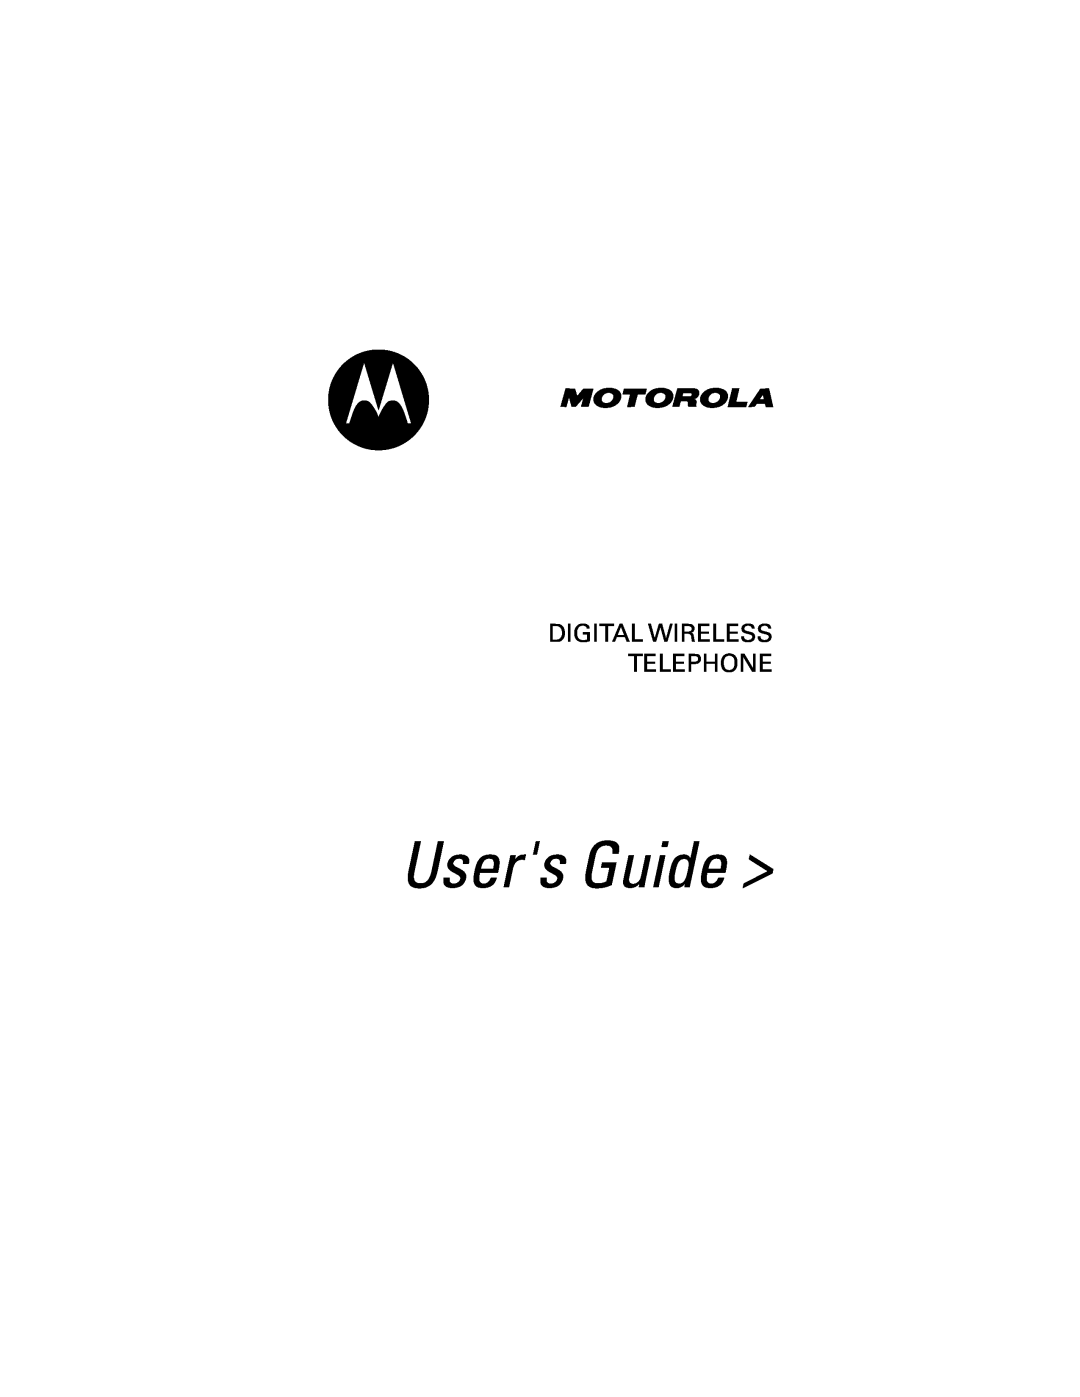 Motorola WIRELESS TELEPHONE manual Users Guide, Digital Wireless Telephone 